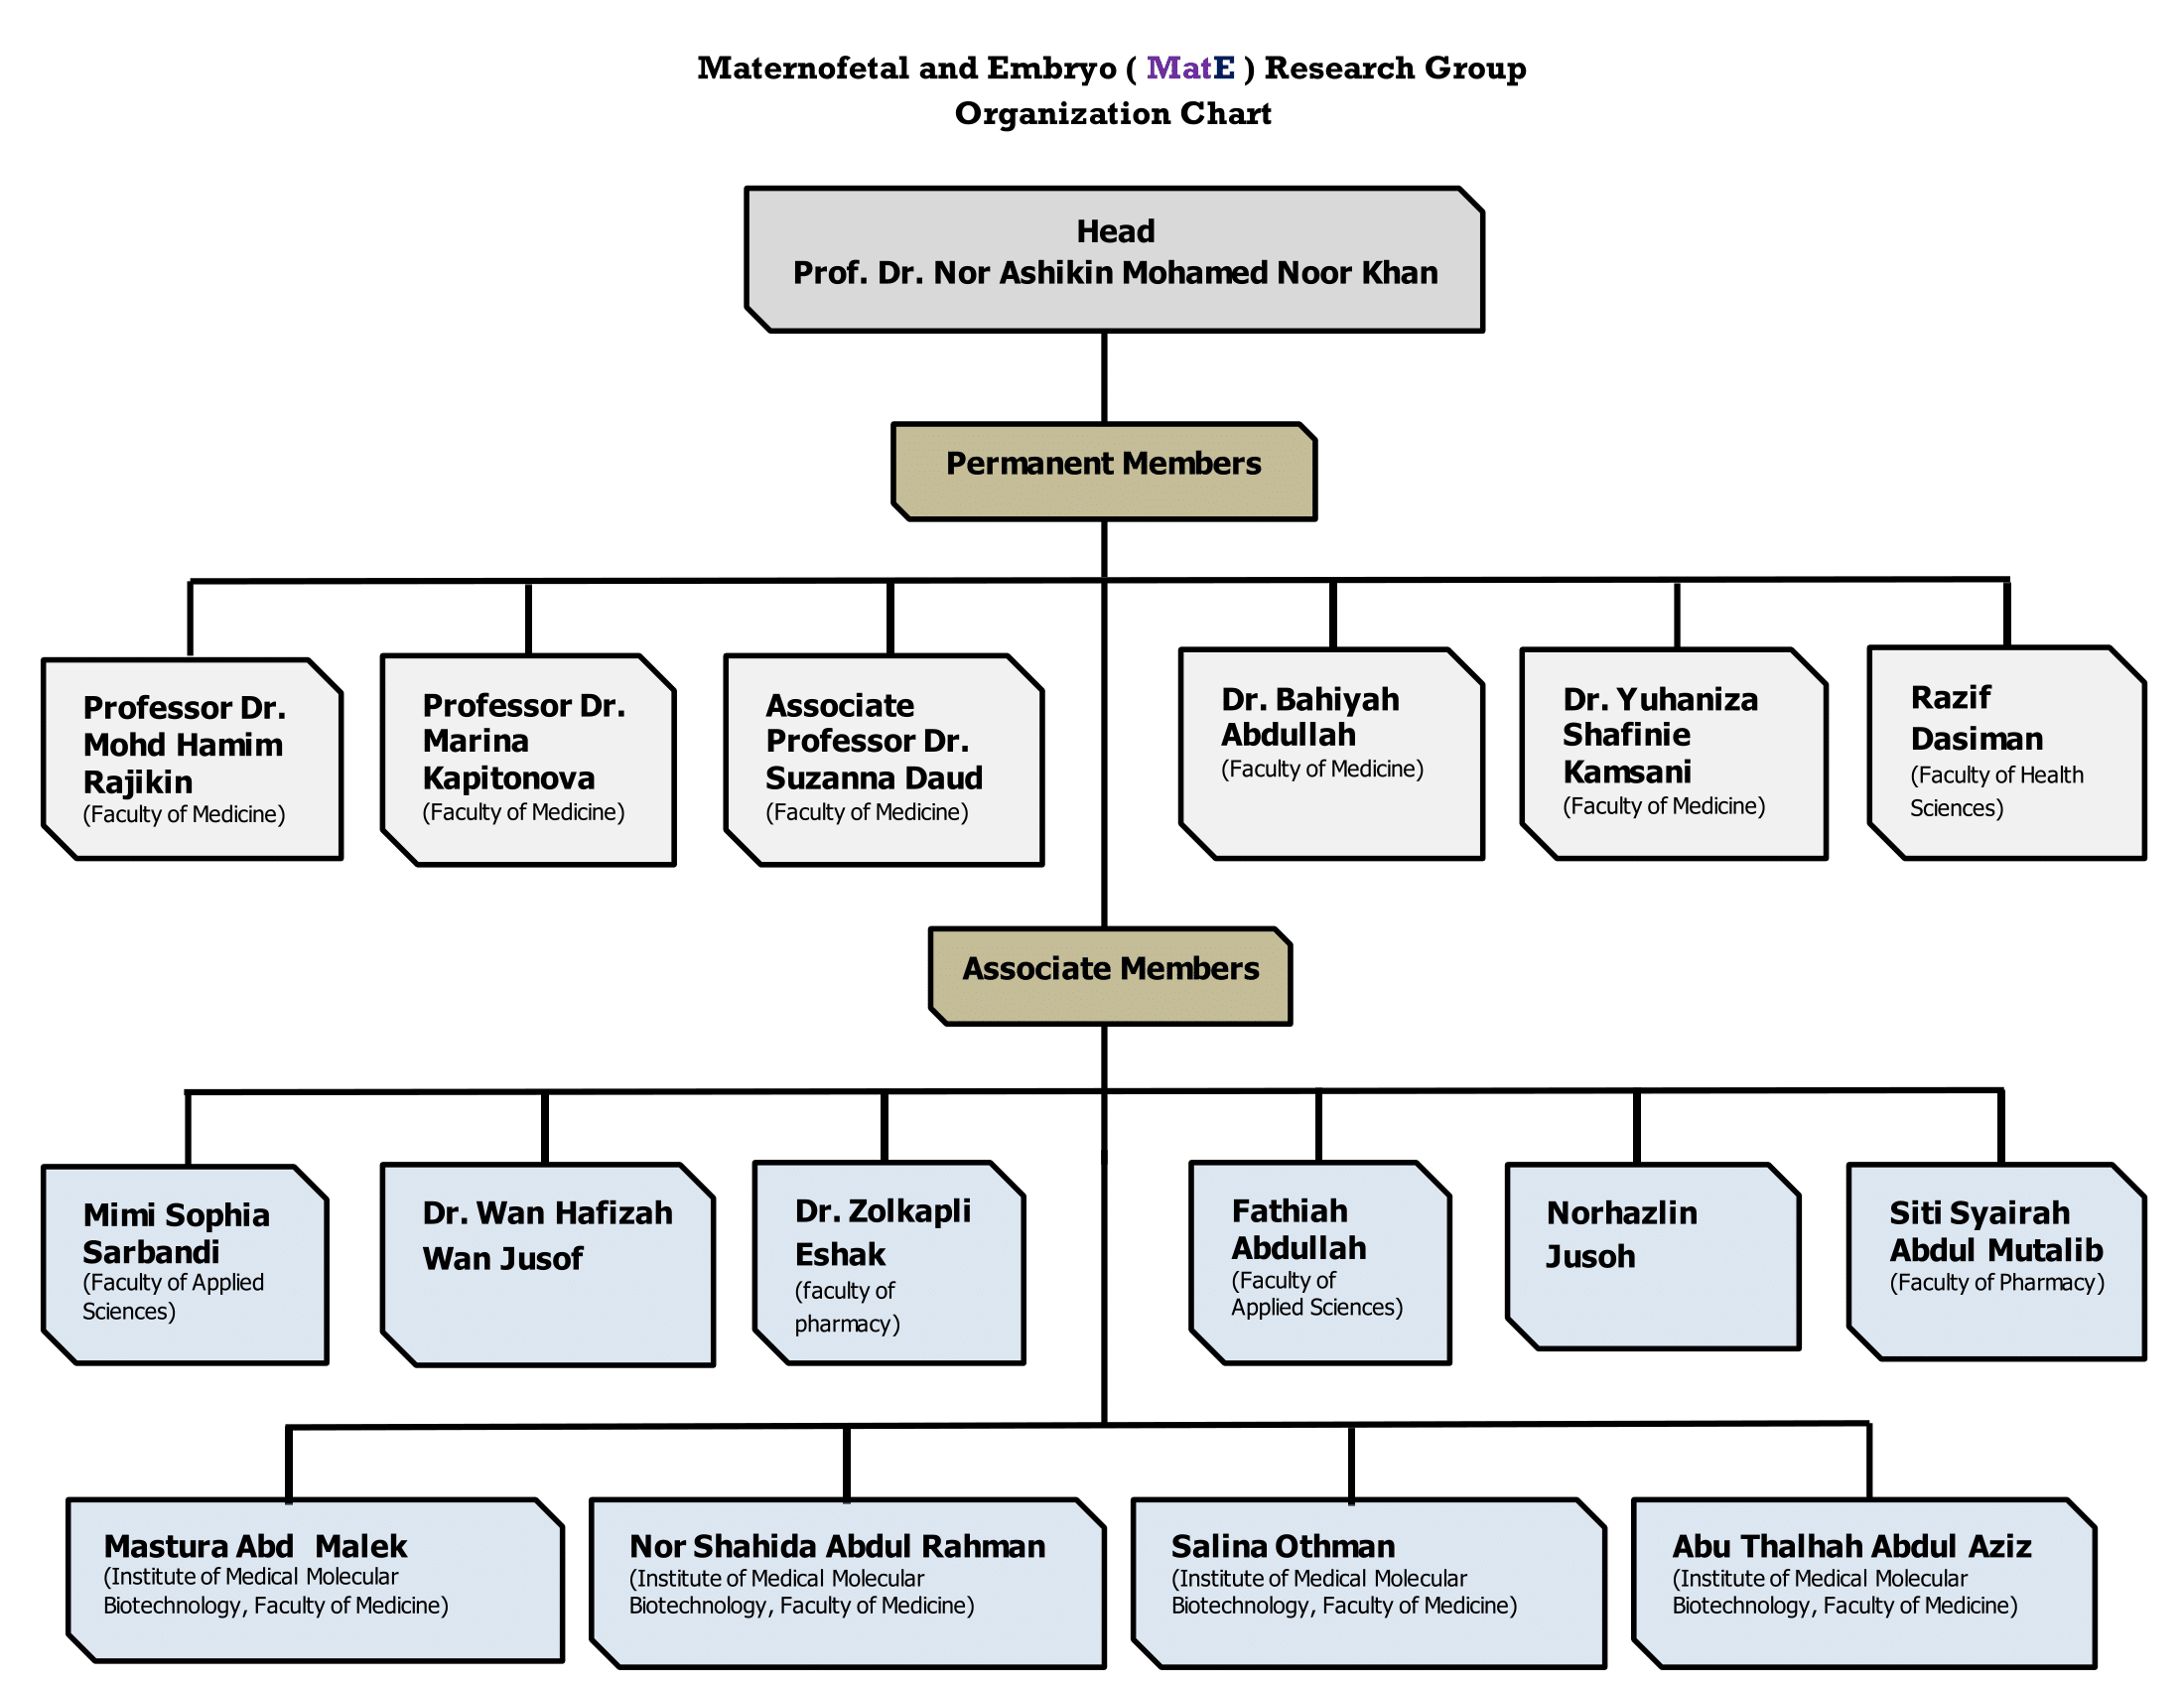 organization chart edited Copy 1